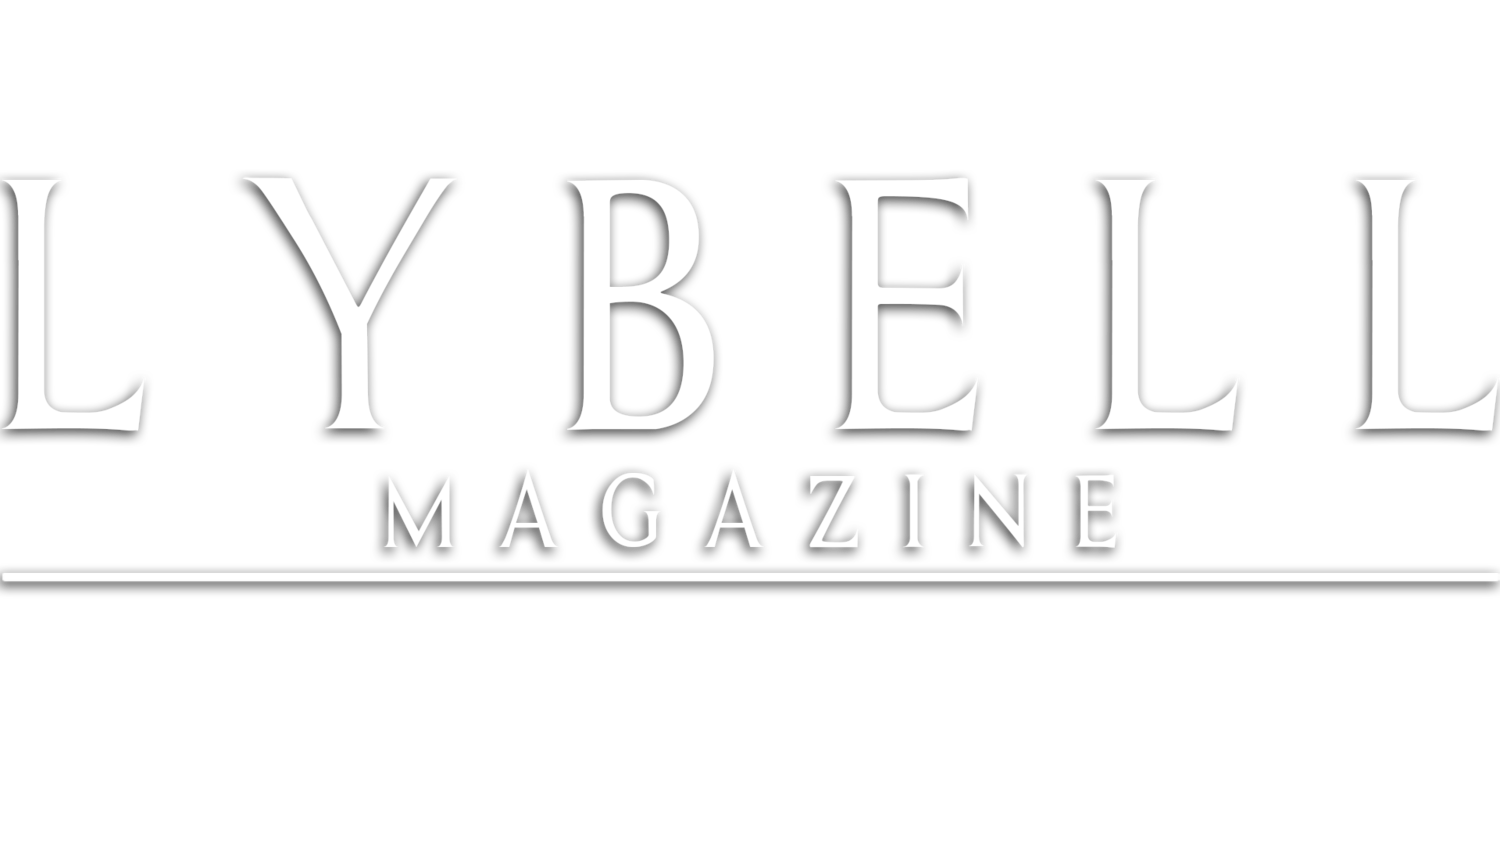 LYBELL Magazine